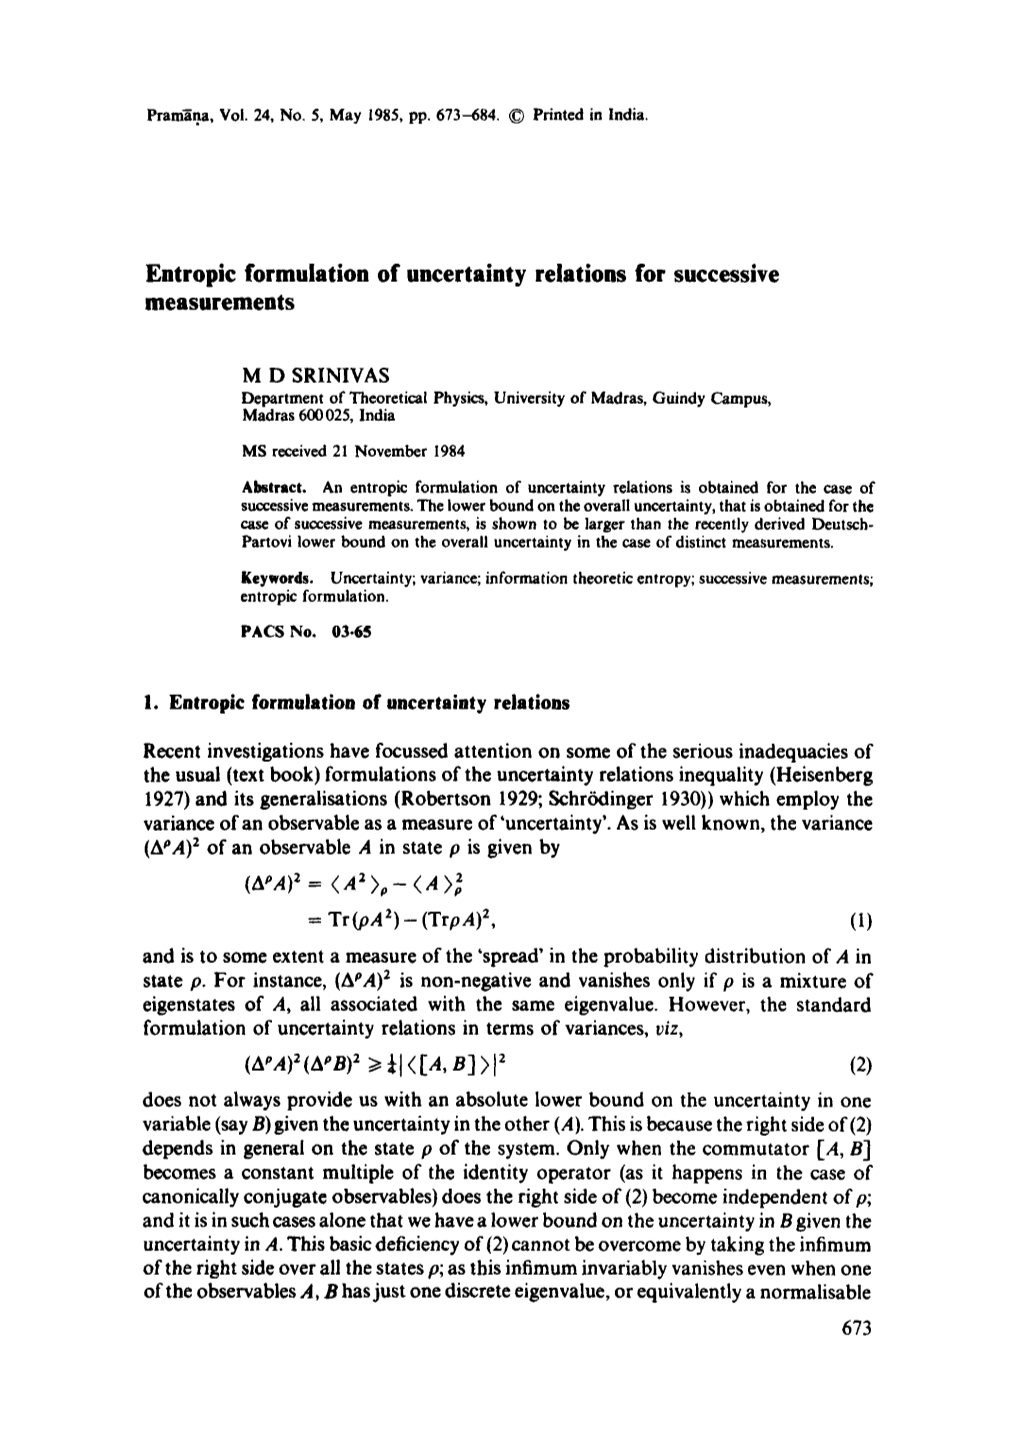 Entropic Formulation of Uncertainty Relations for Successive Measurements